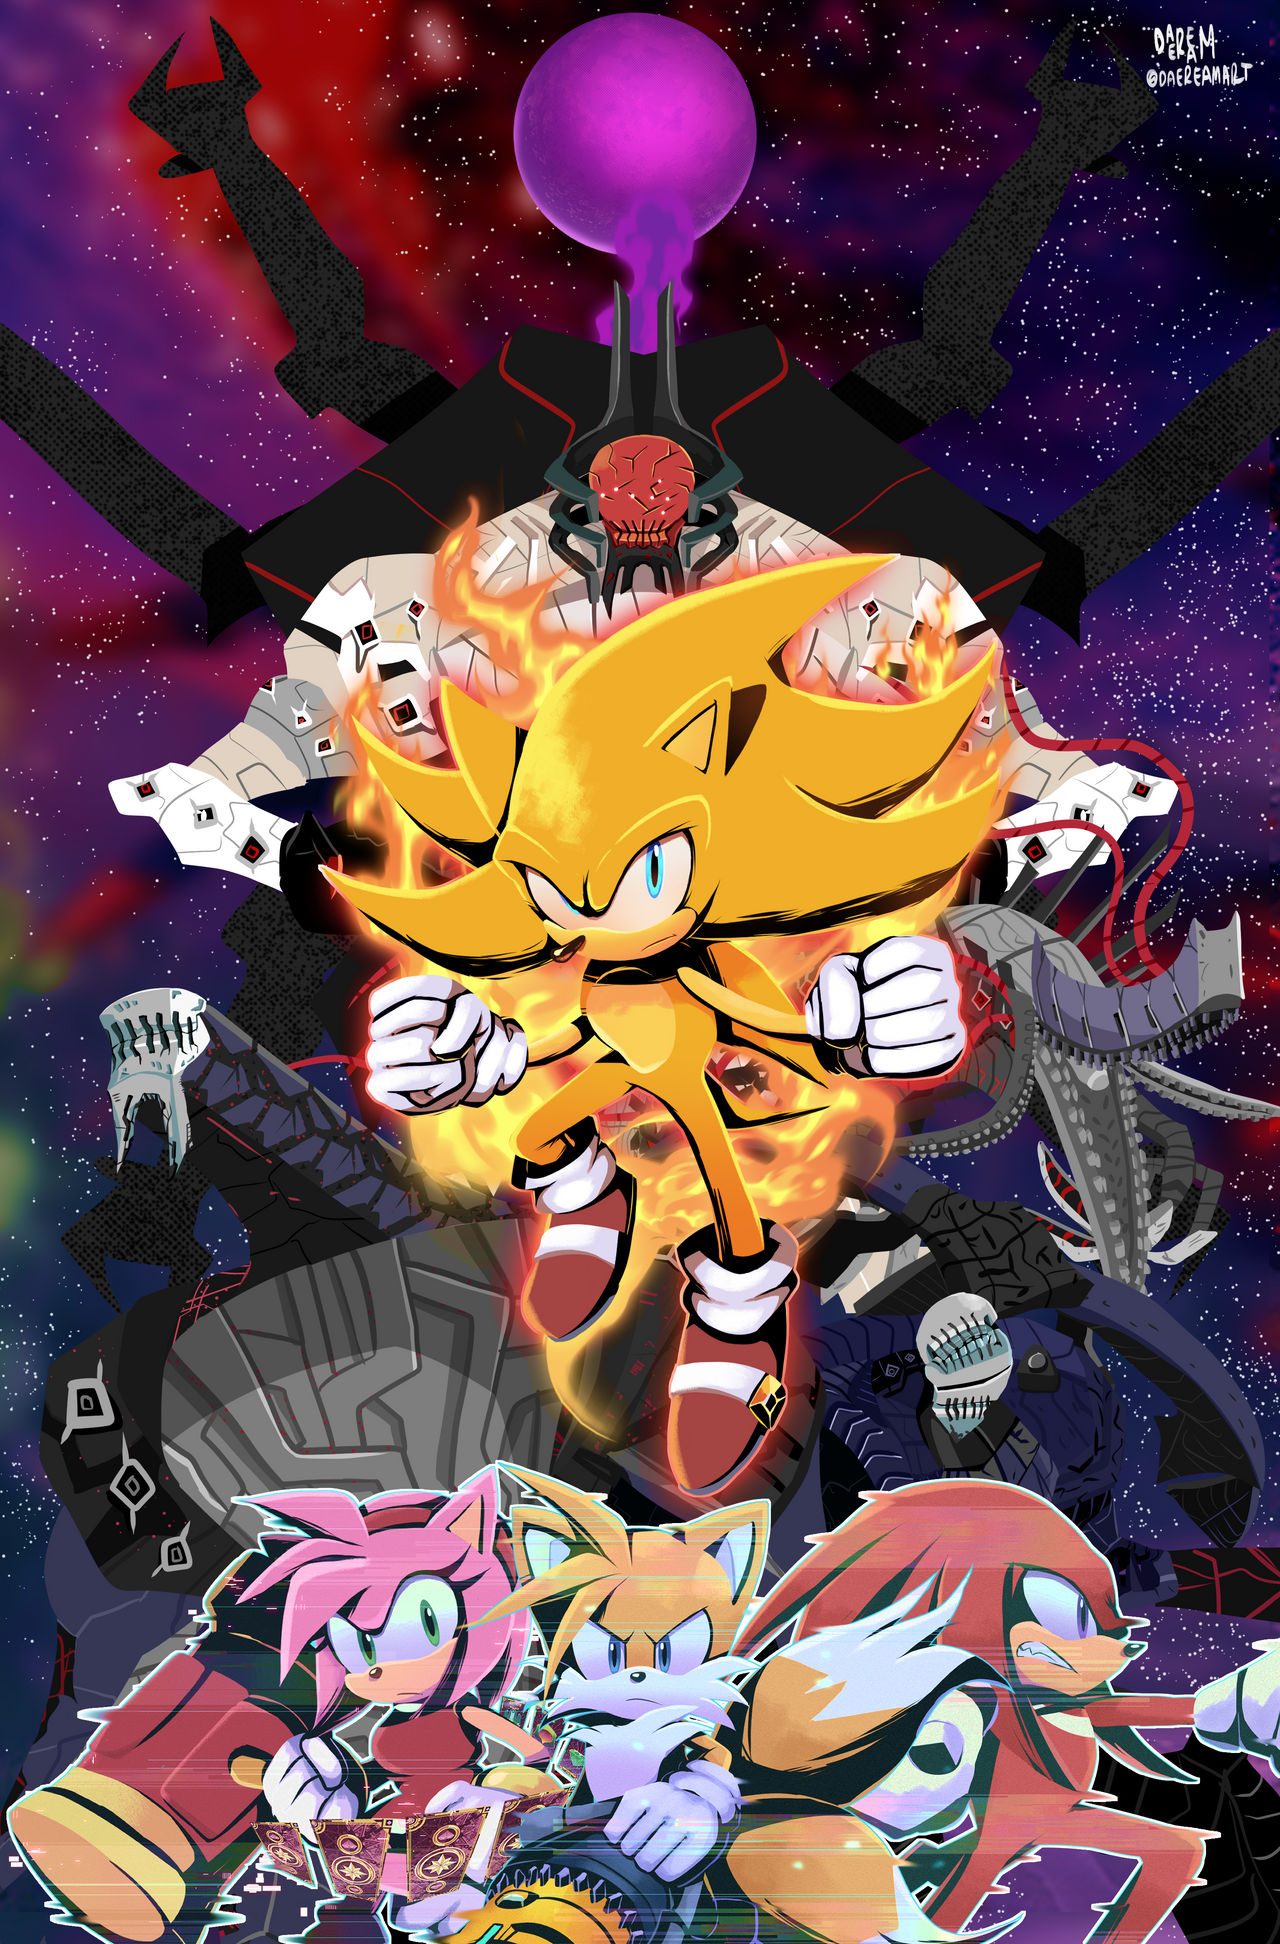 Super Sonic Sonic Frontiers Final Horizon by Deaream on DeviantArt